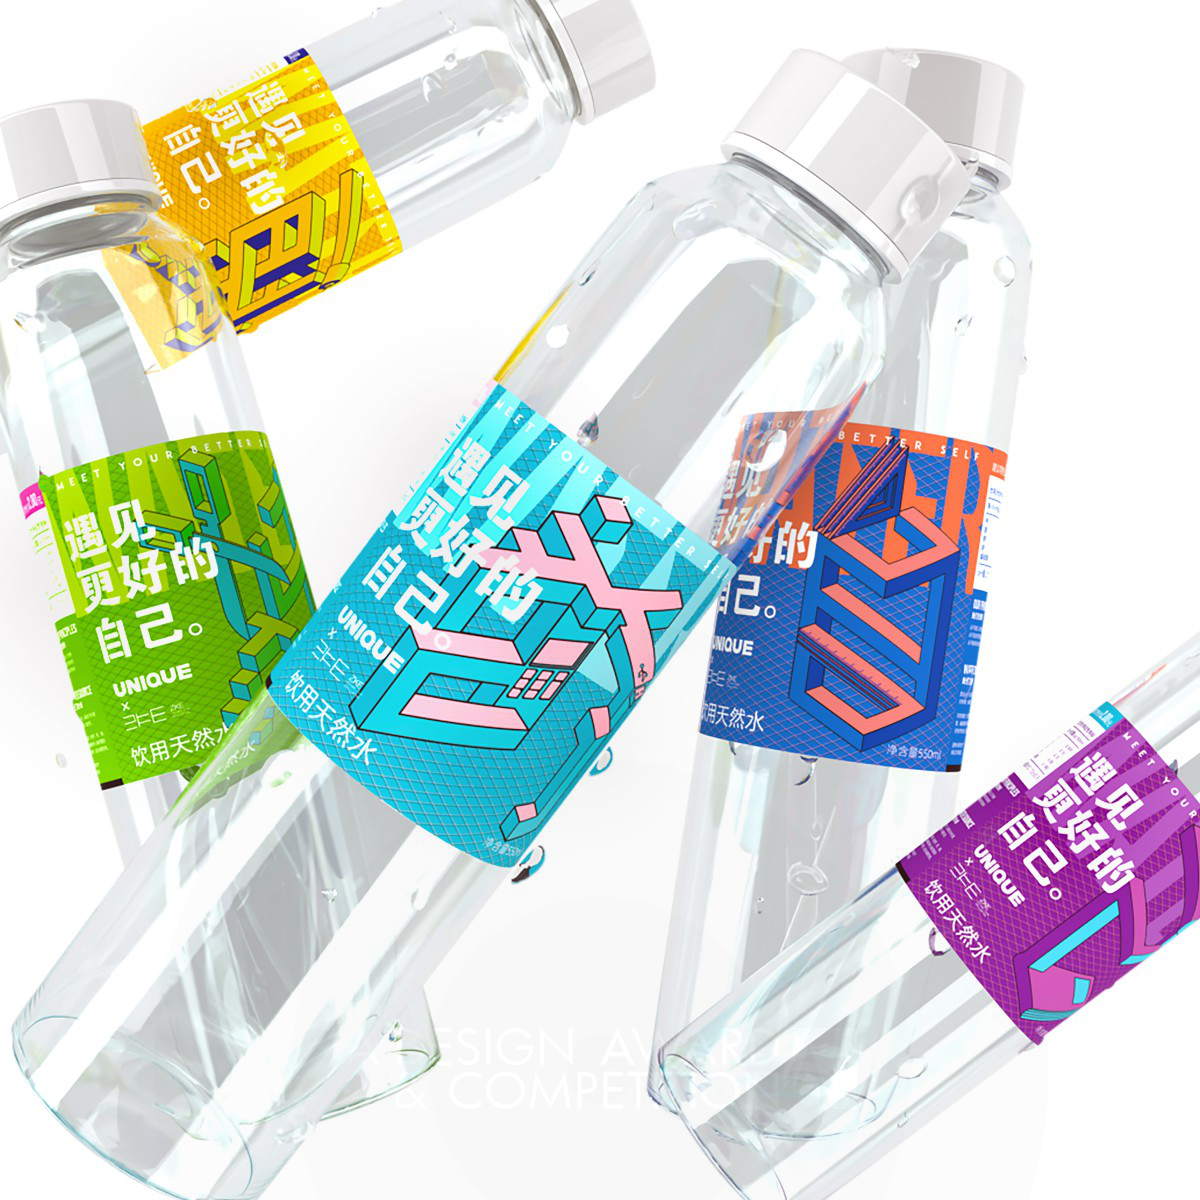 Puzzle Water Packaging by WEIWEI ZHANG